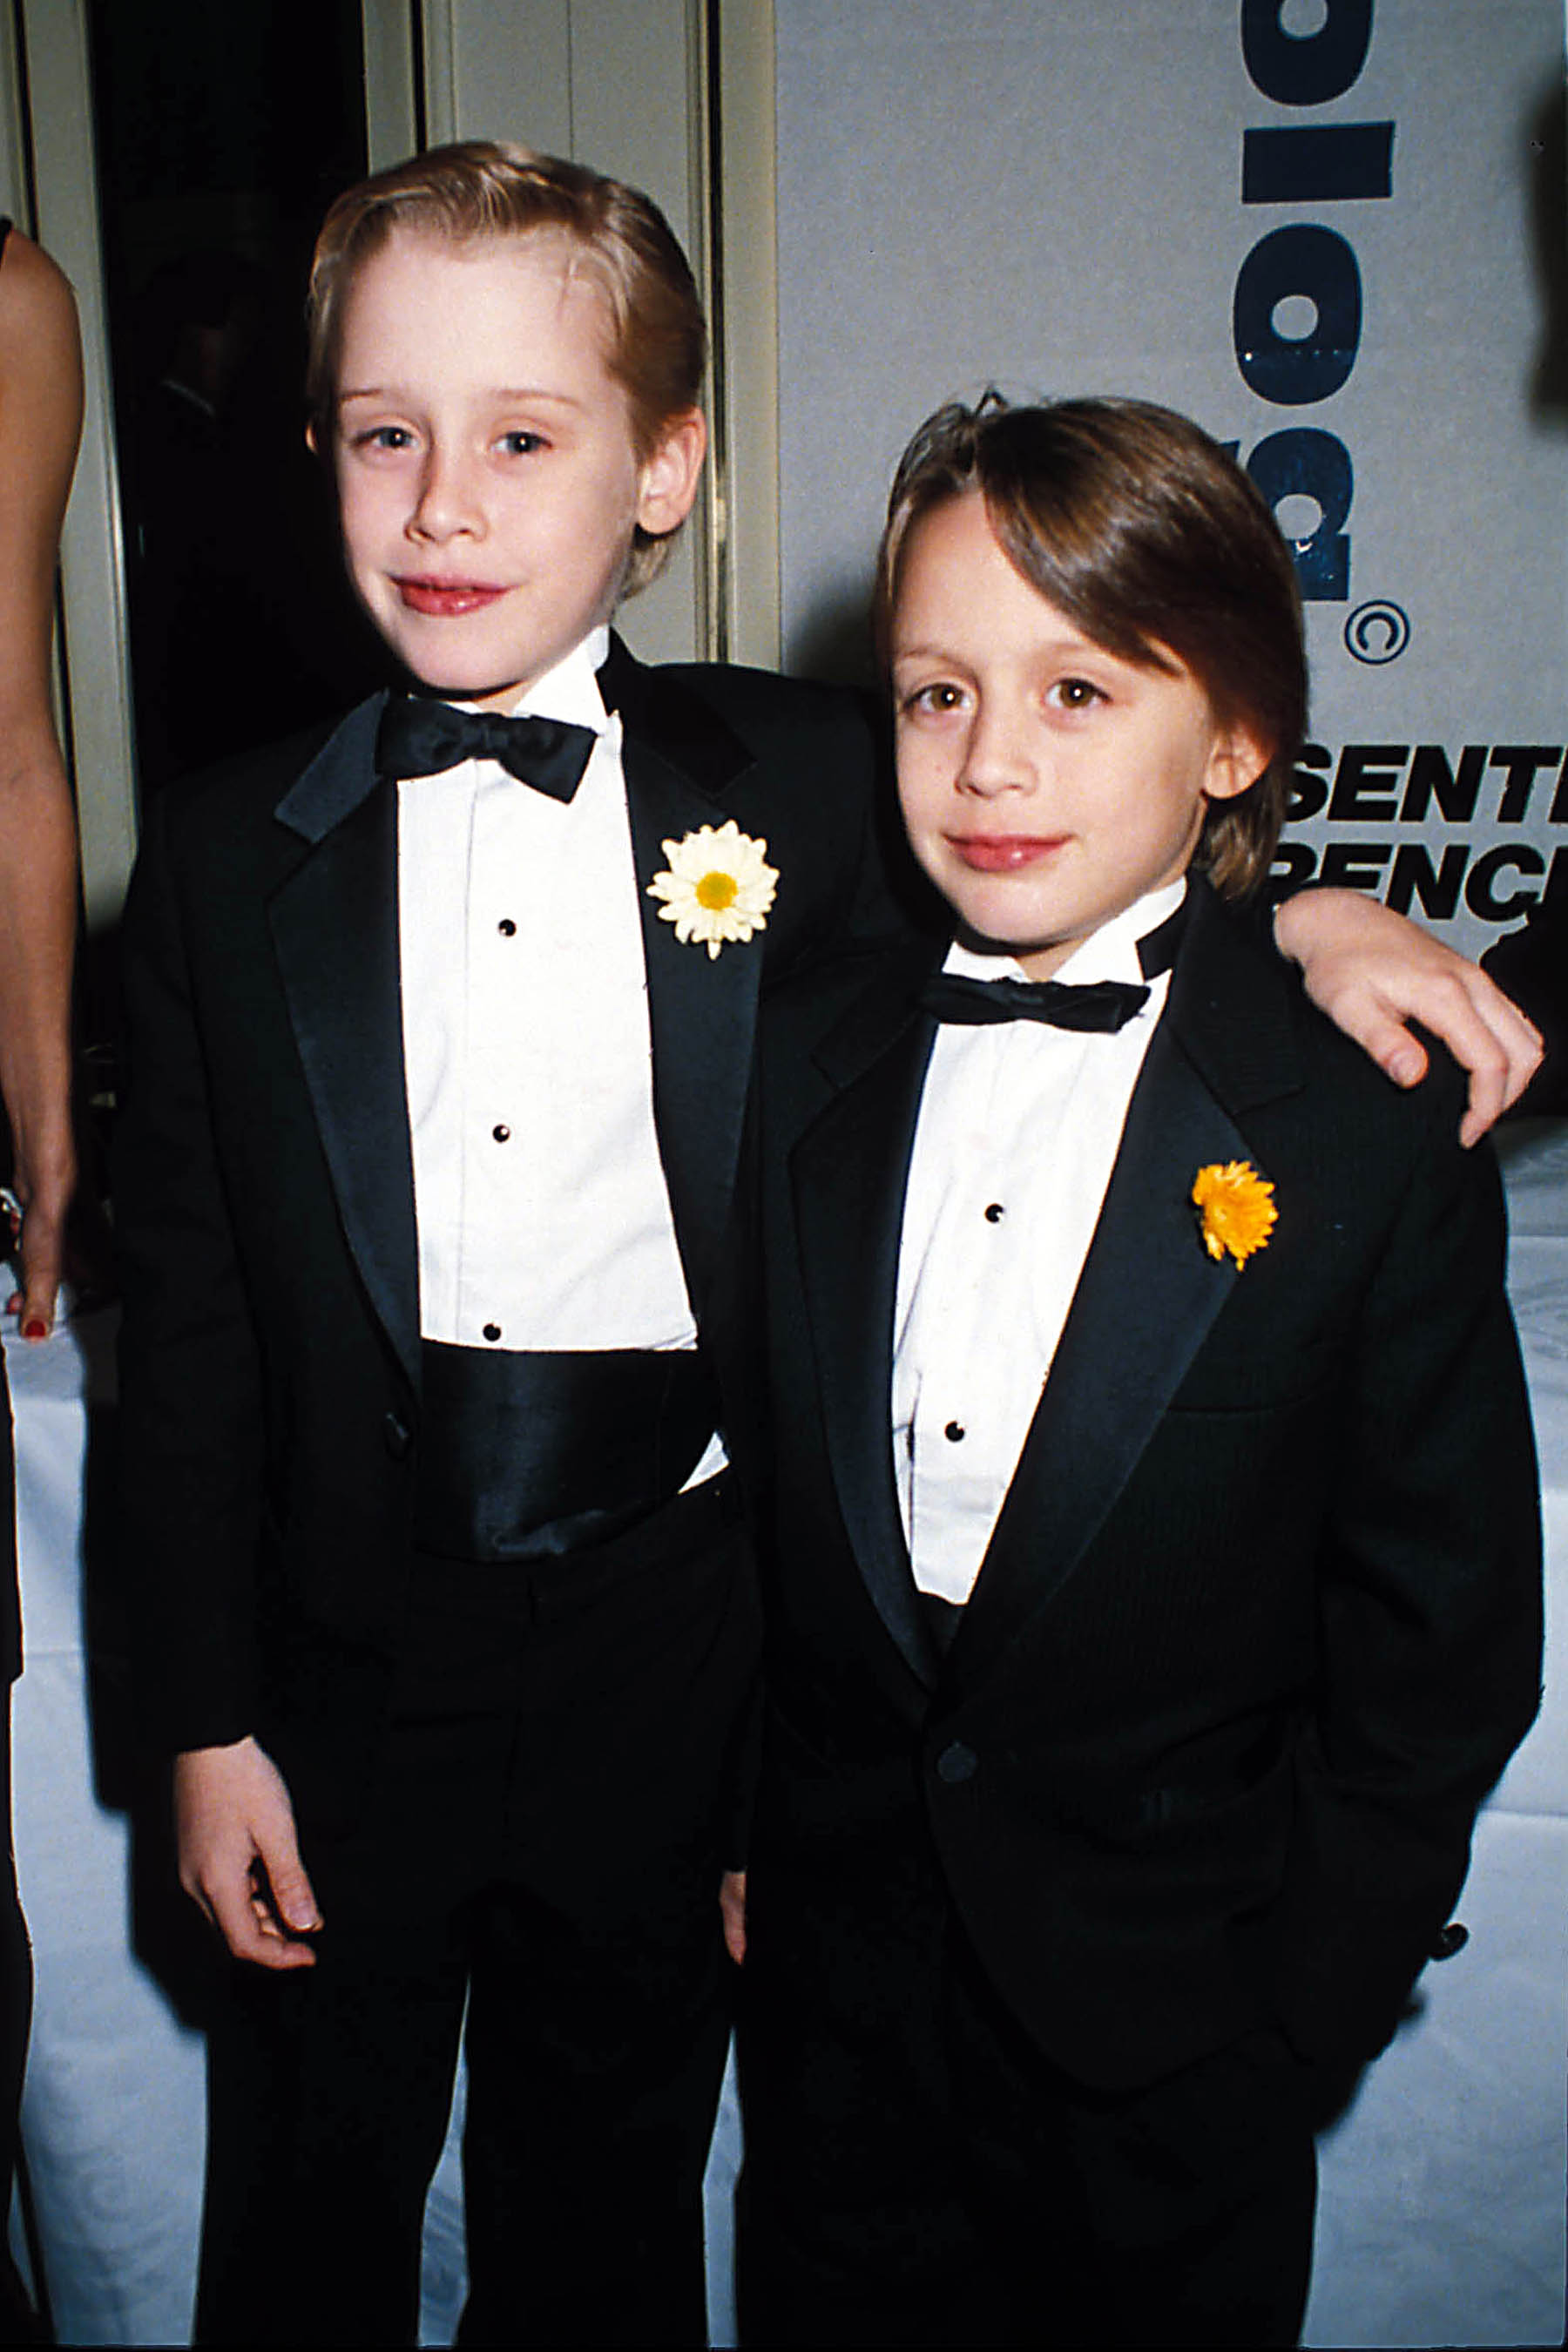 Macaulay et Kieran Culkin, vers 1990 | Source : Getty Images